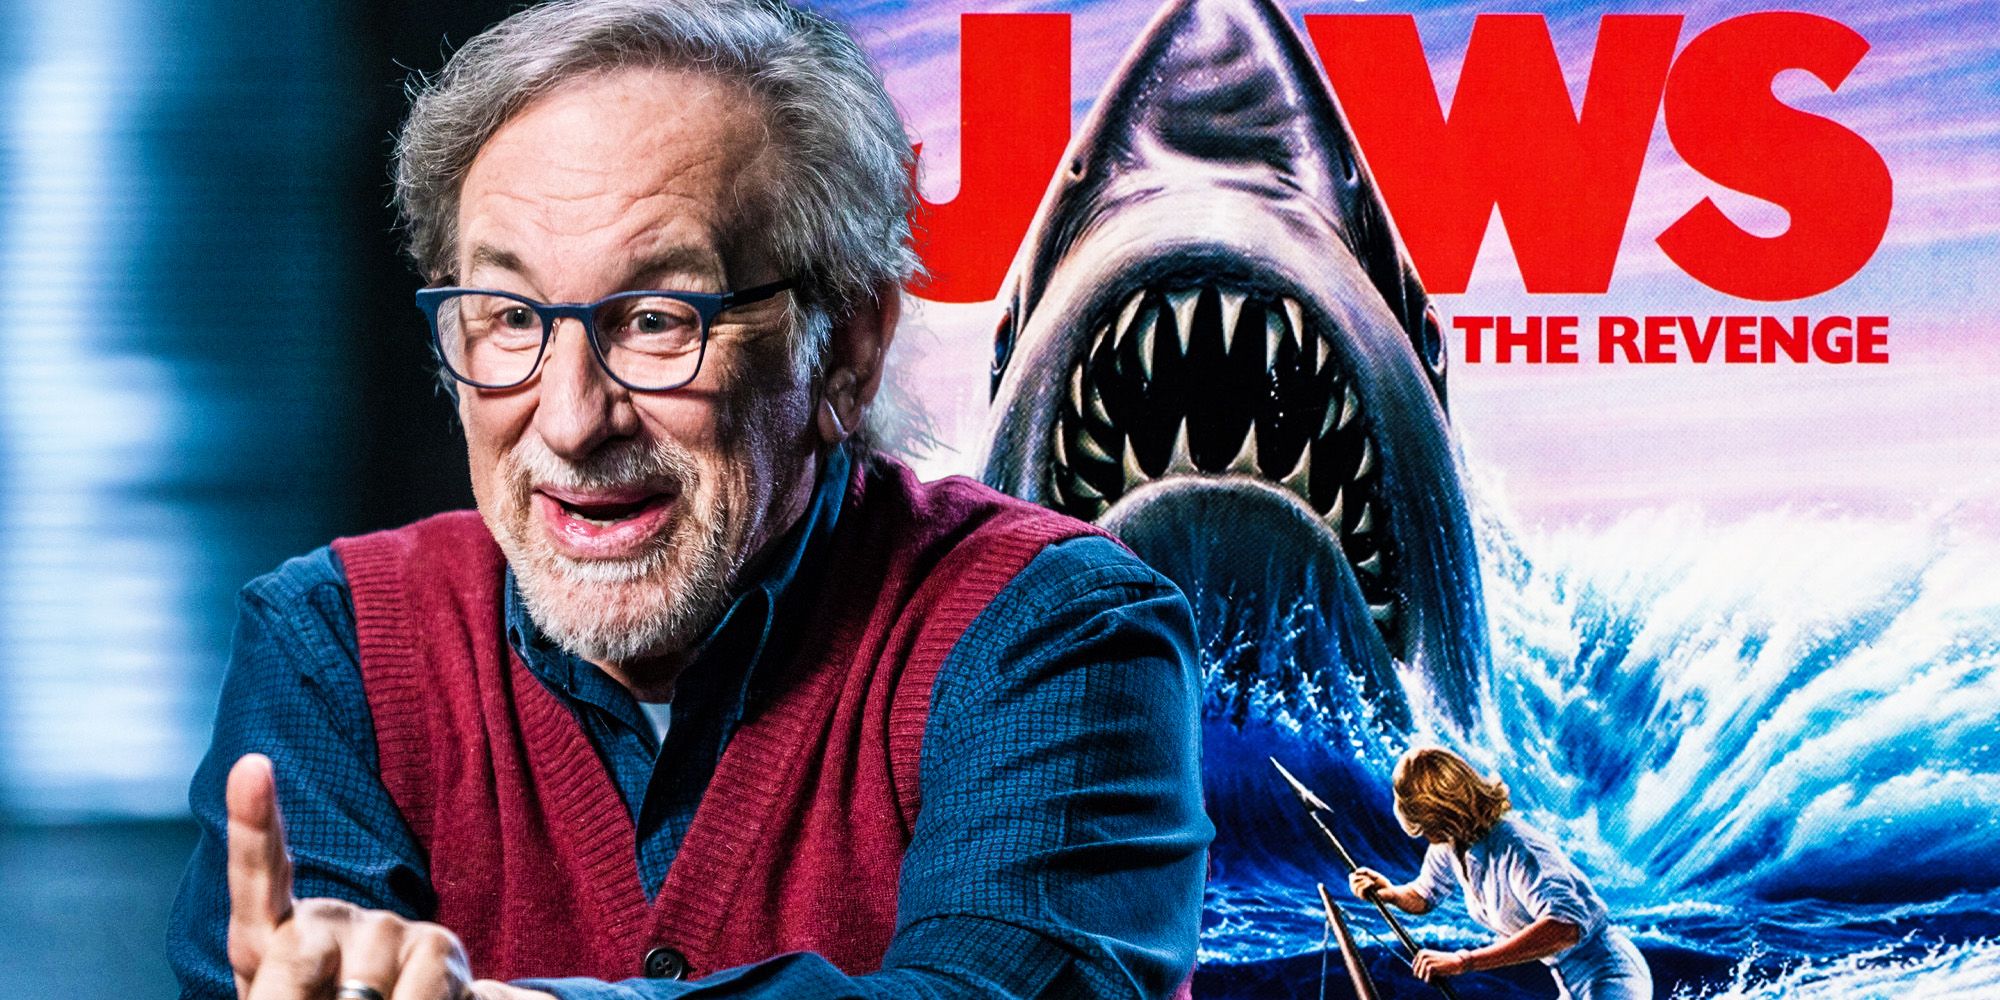 La carta que Steven Spielberg envió a Jaws: The Revenge’s Director